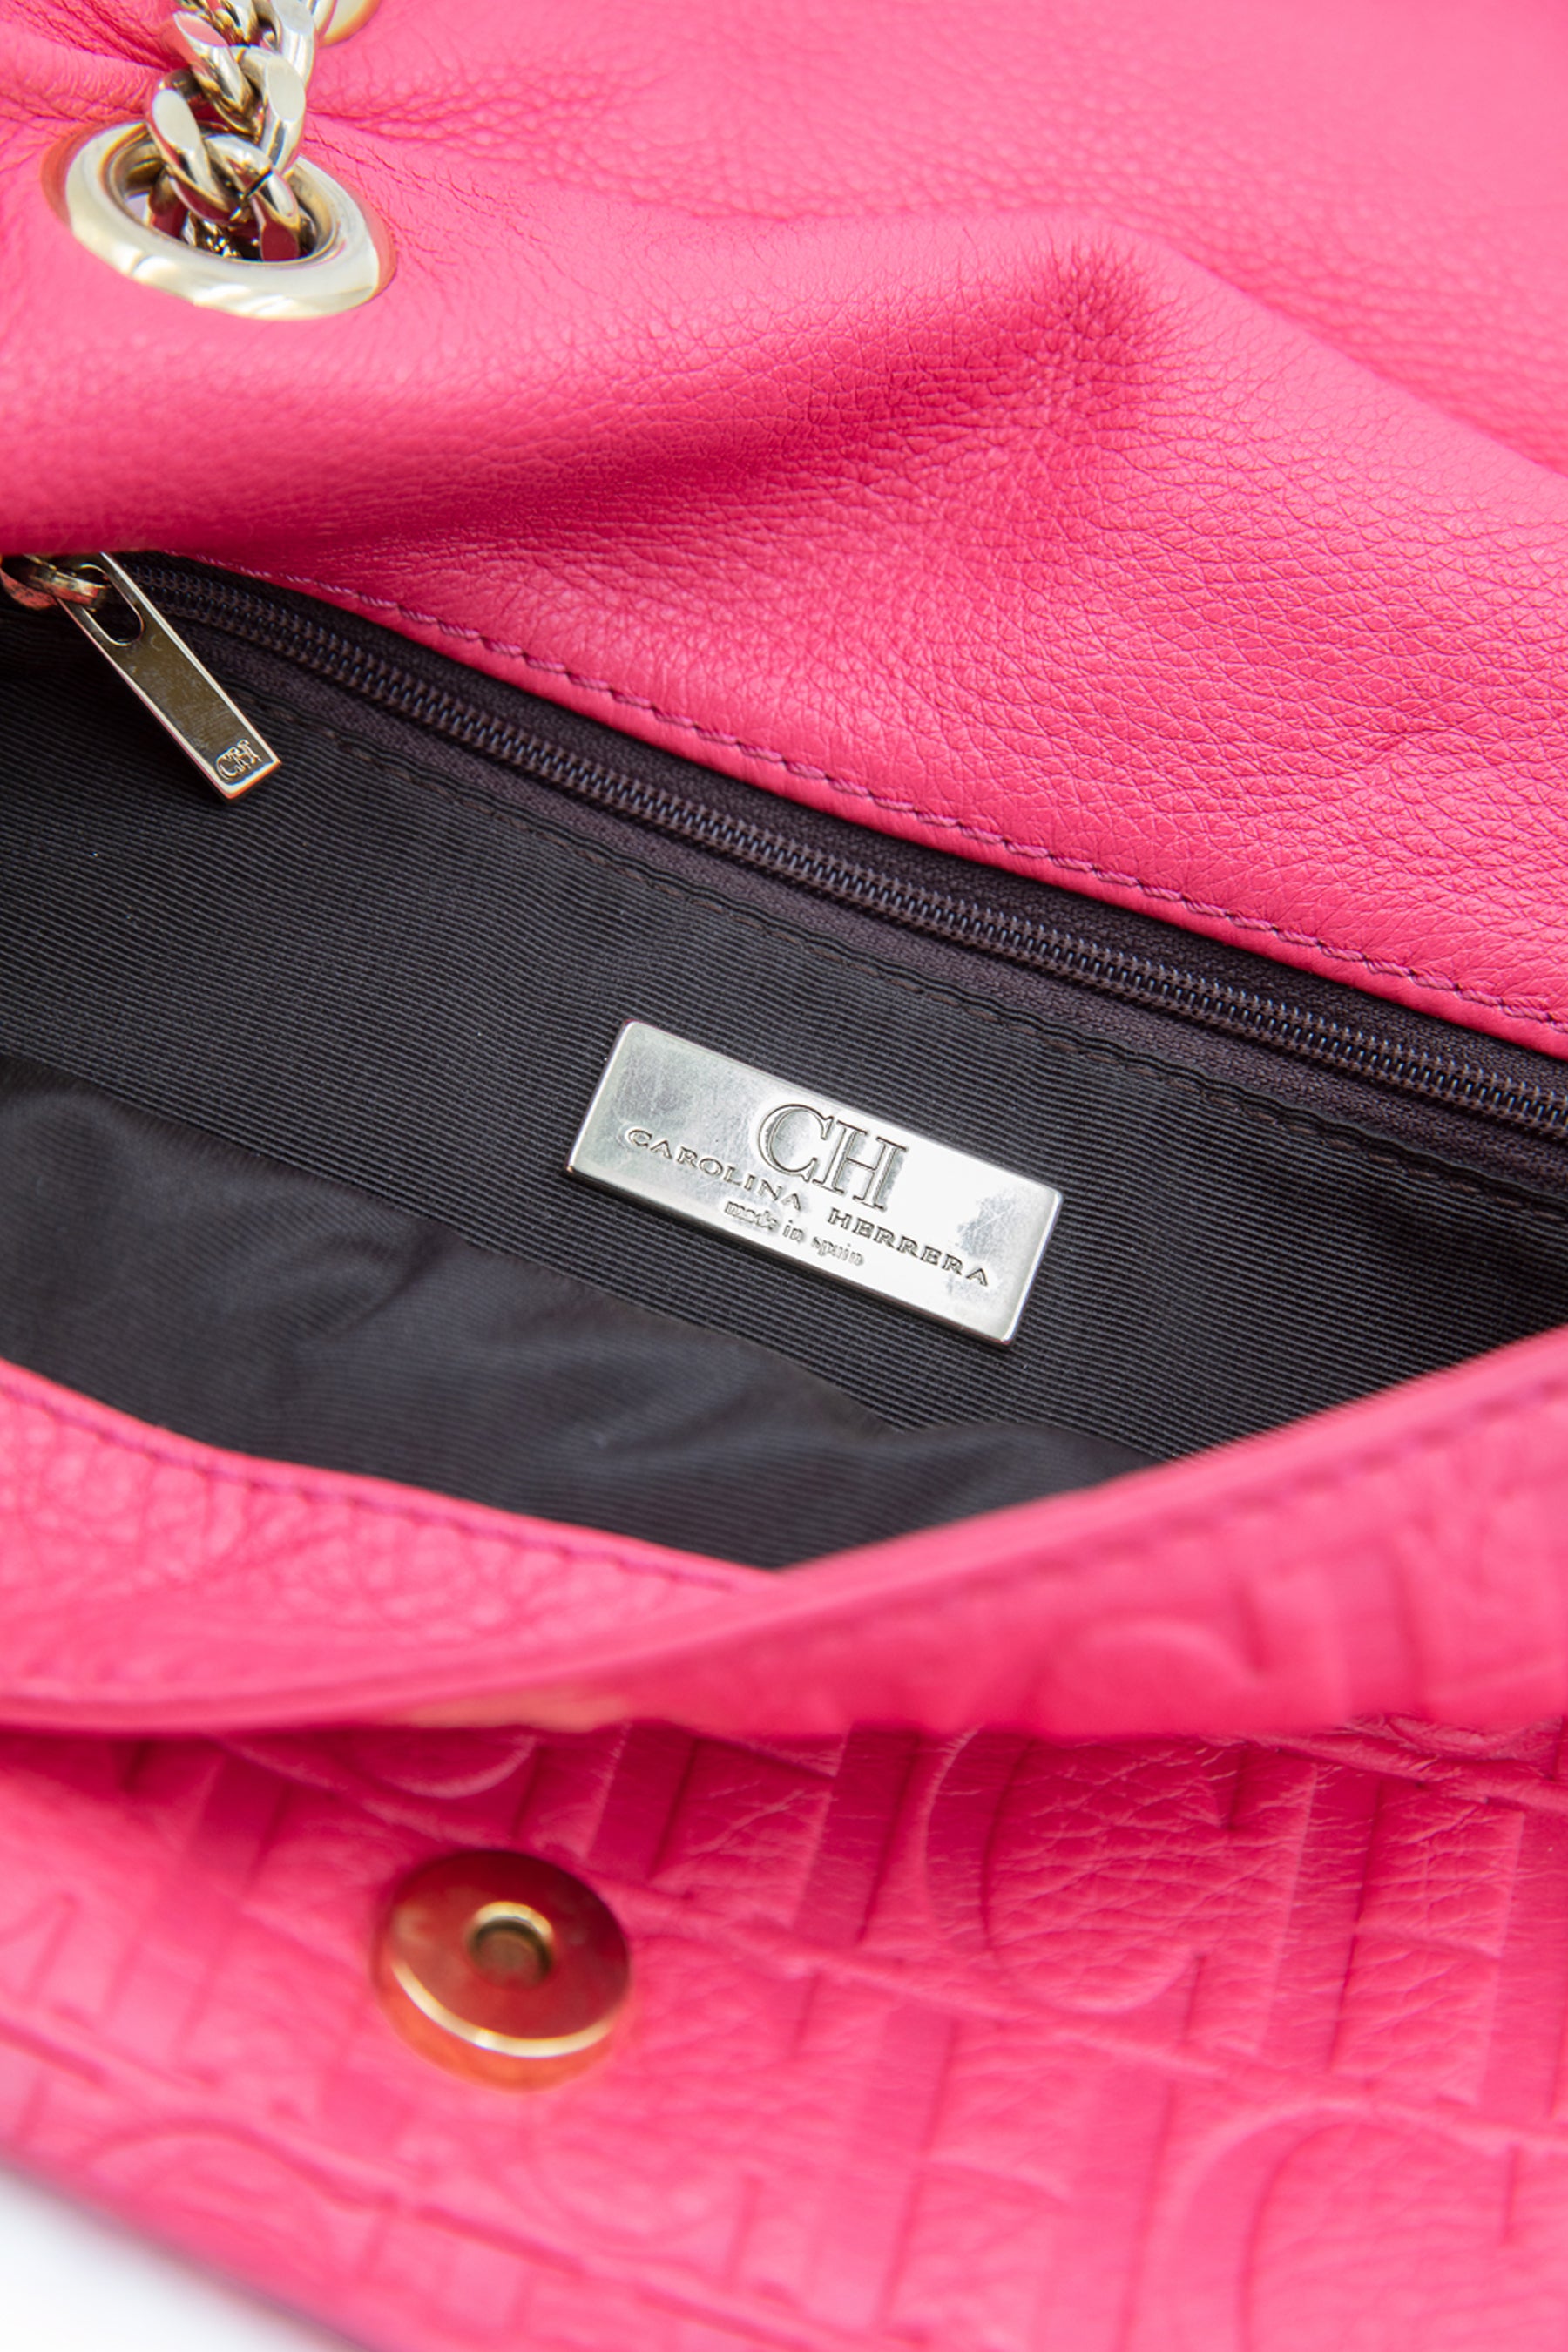 Pre-owned Ch Carolina Herrera Black Leather Crossbody Bag